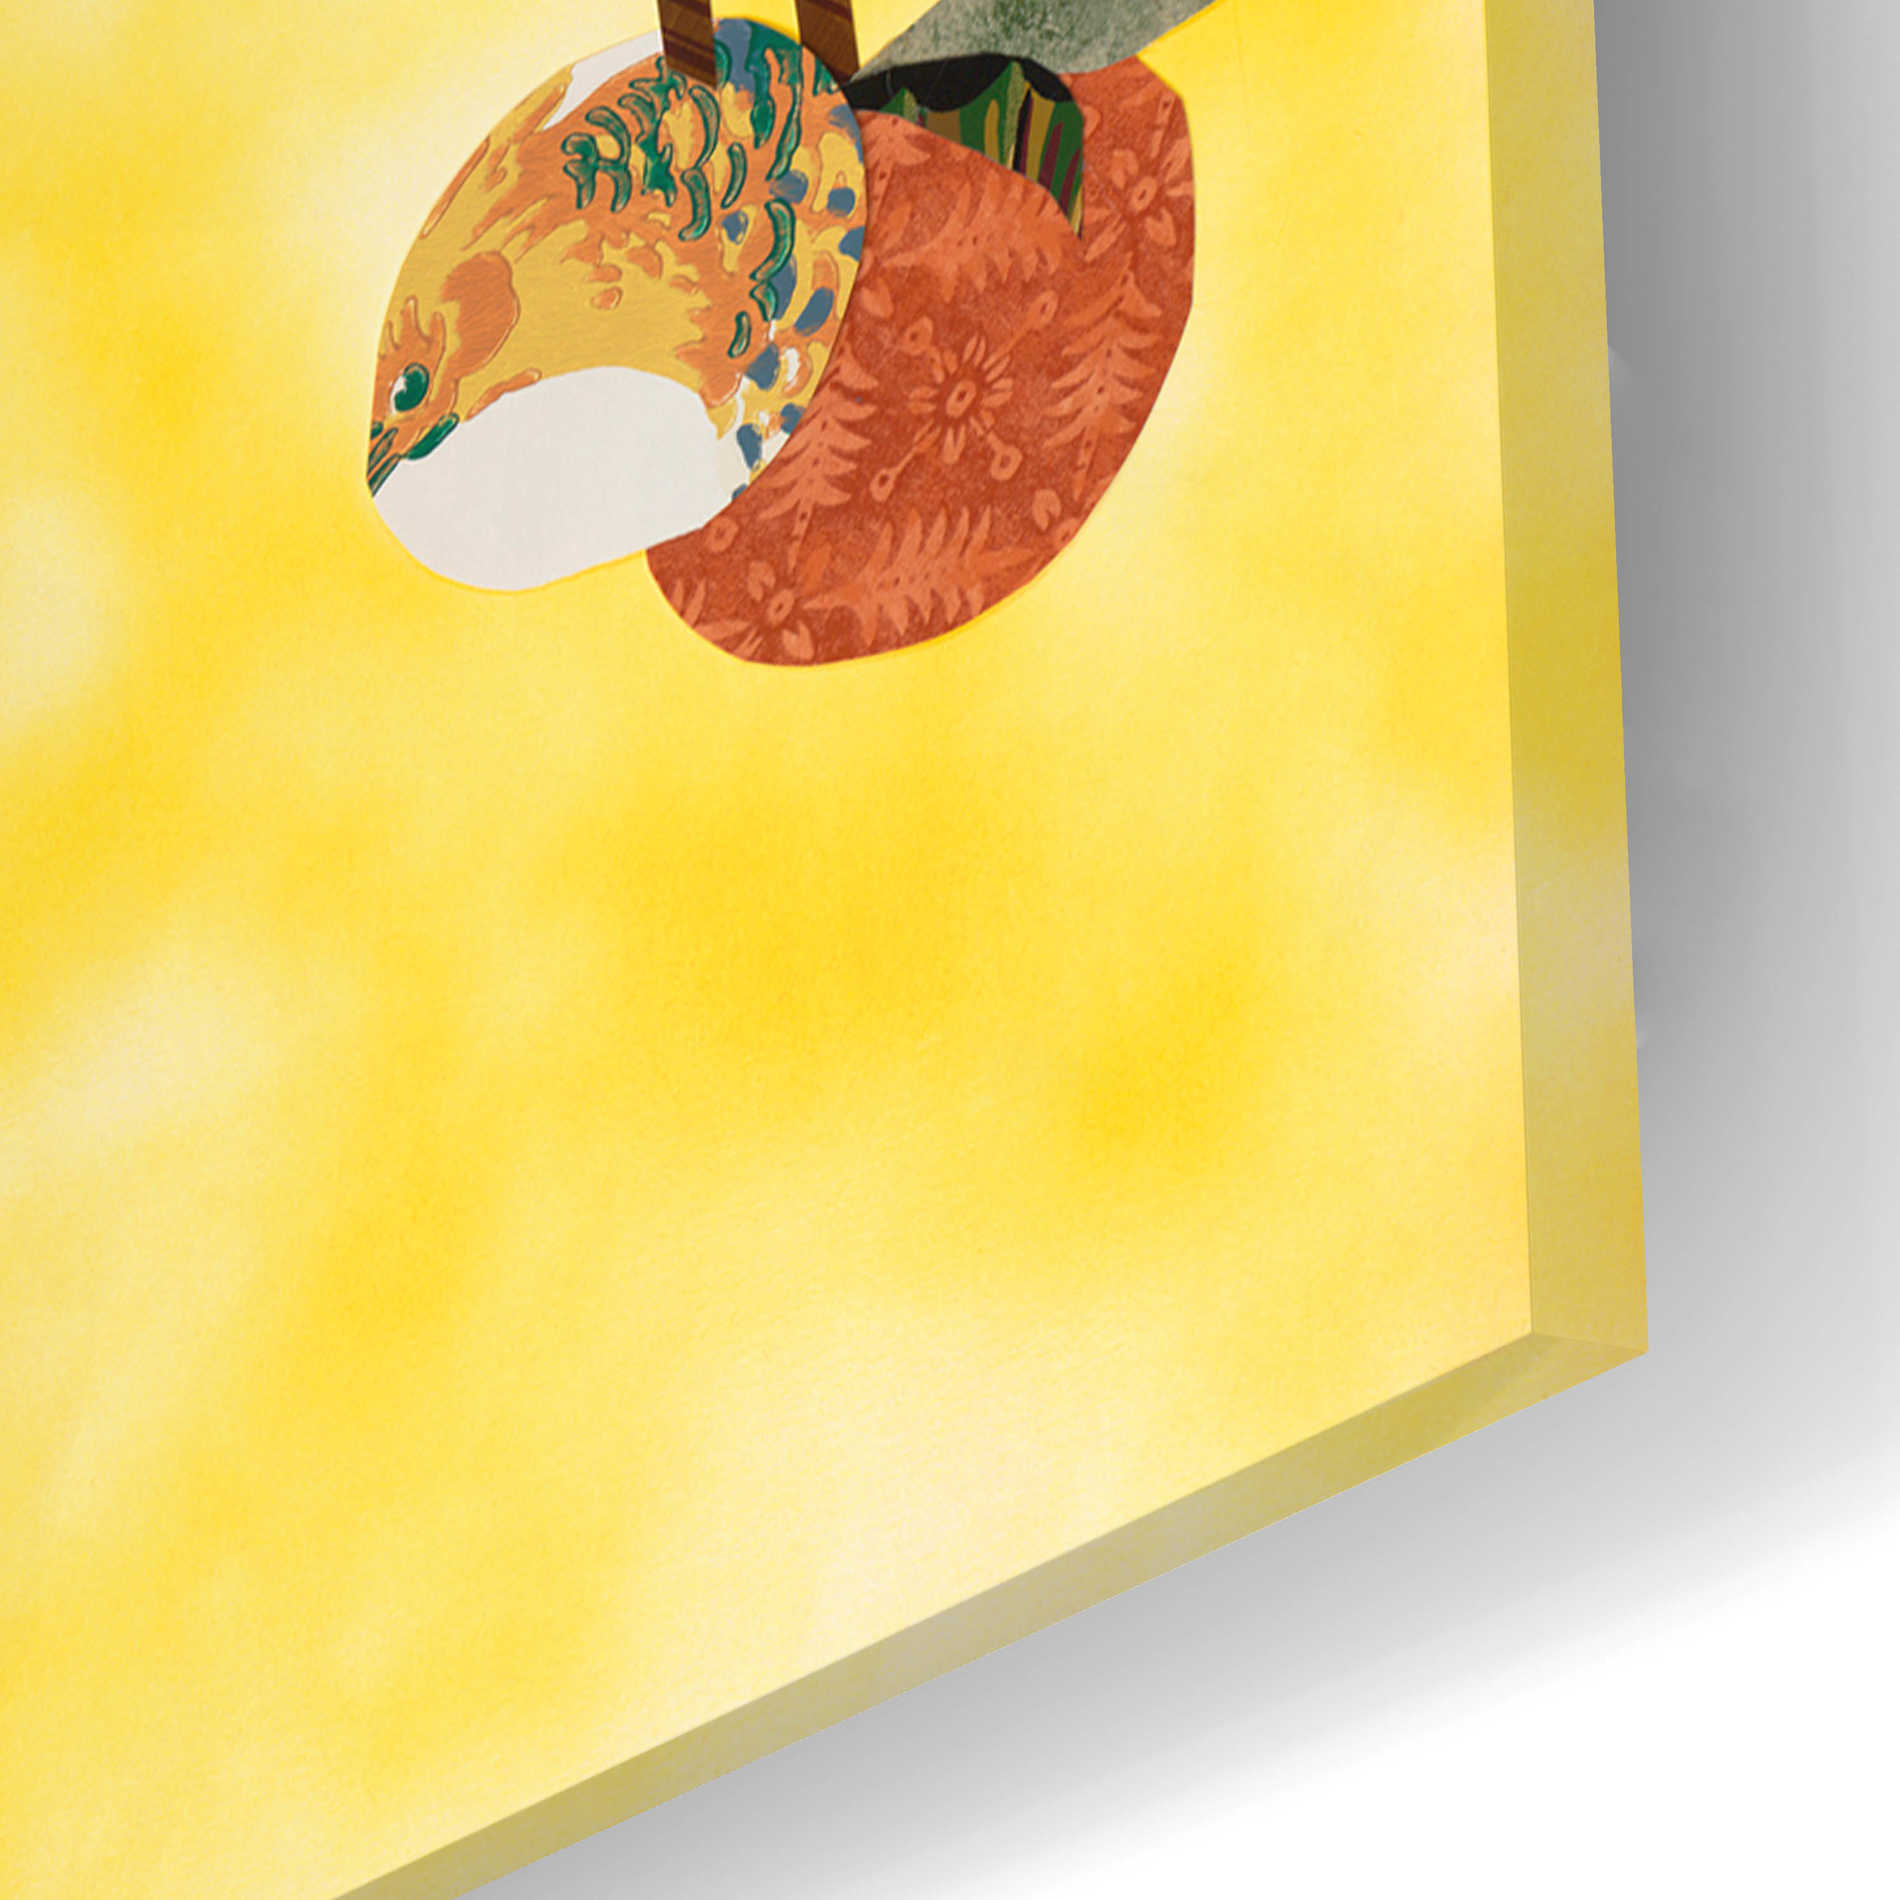 Epic Art 'Yellow Orange Tree' by Sisa Jasper,' Acrylic Glass Wall Art,24x16